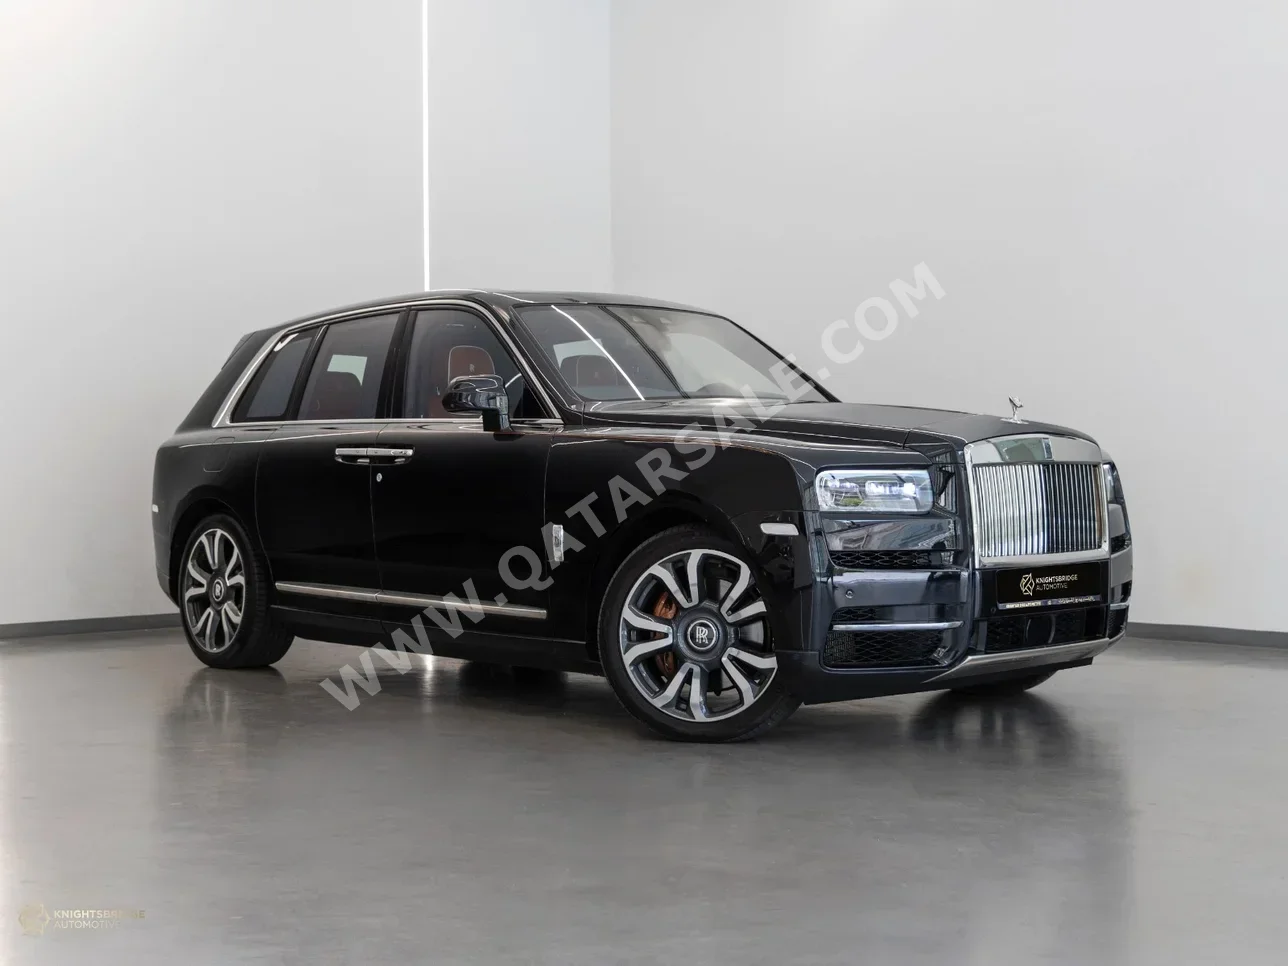  Rolls-Royce  Cullinan  2020  Automatic  37,000 Km  12 Cylinder  Four Wheel Drive (4WD)  SUV  Black  With Warranty